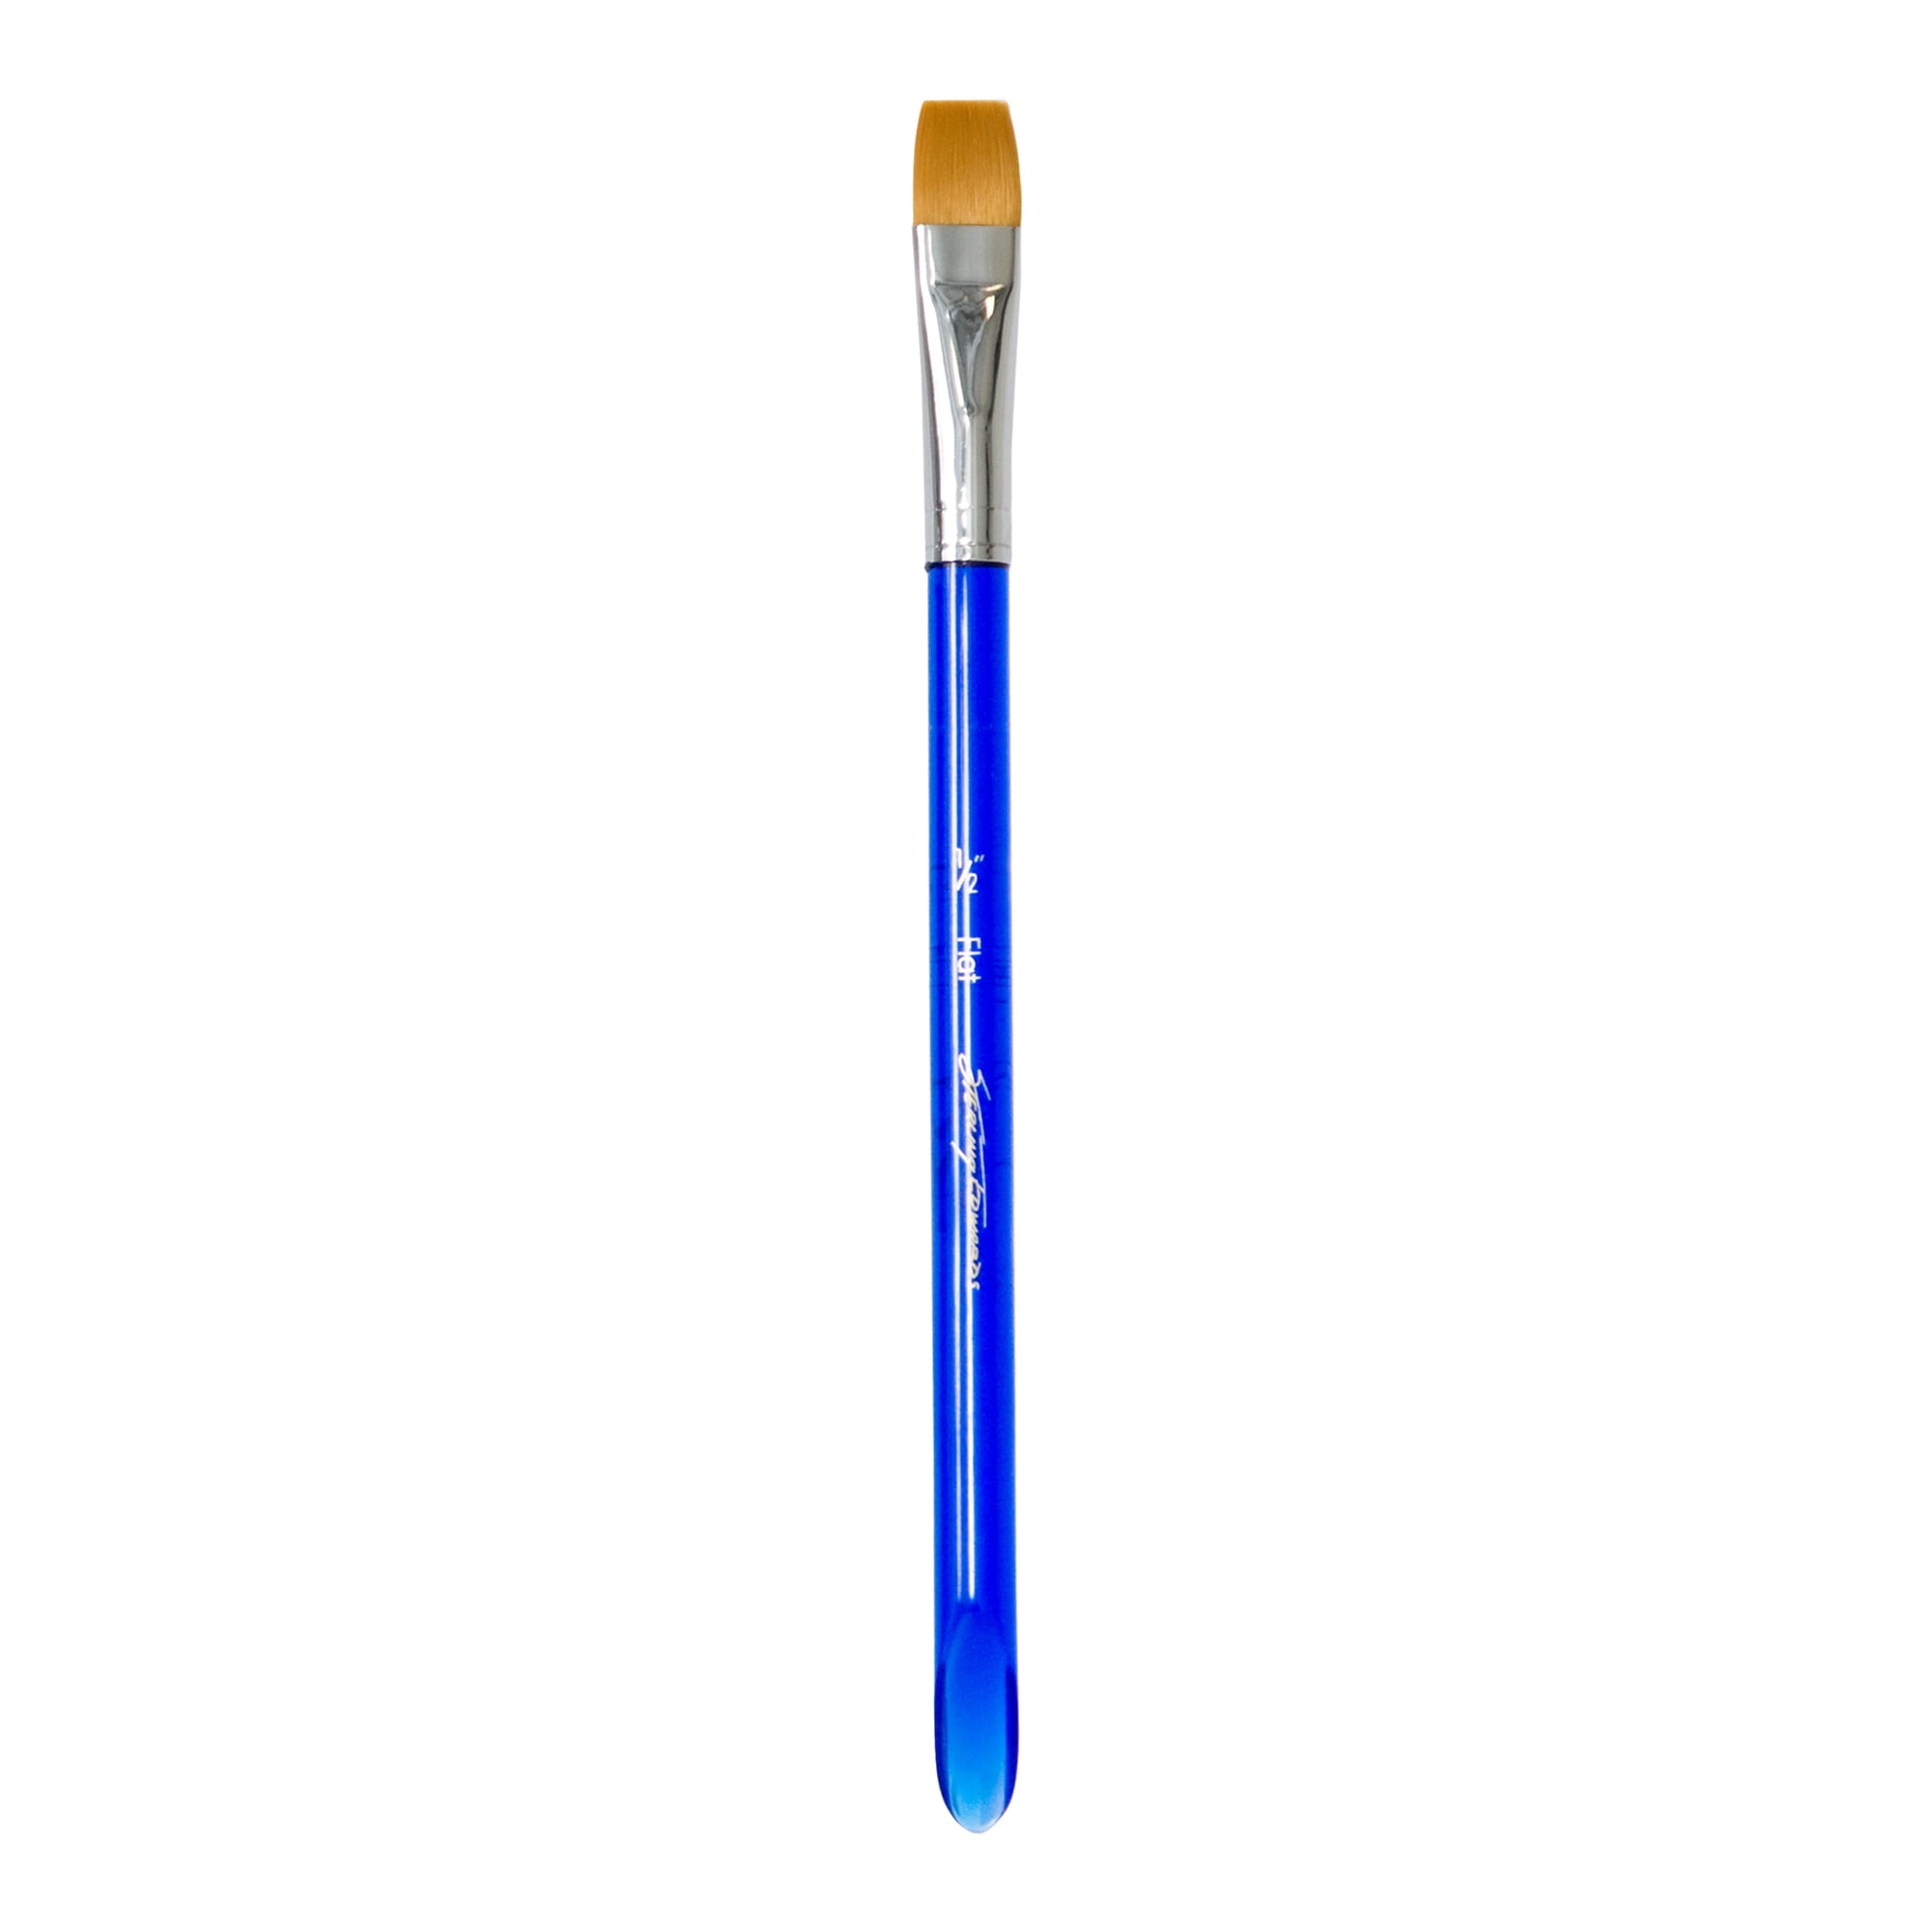 Sterling Edwards Signature Series Watercolor Artist Paint Brush - Round 12  - Single Paintbrush